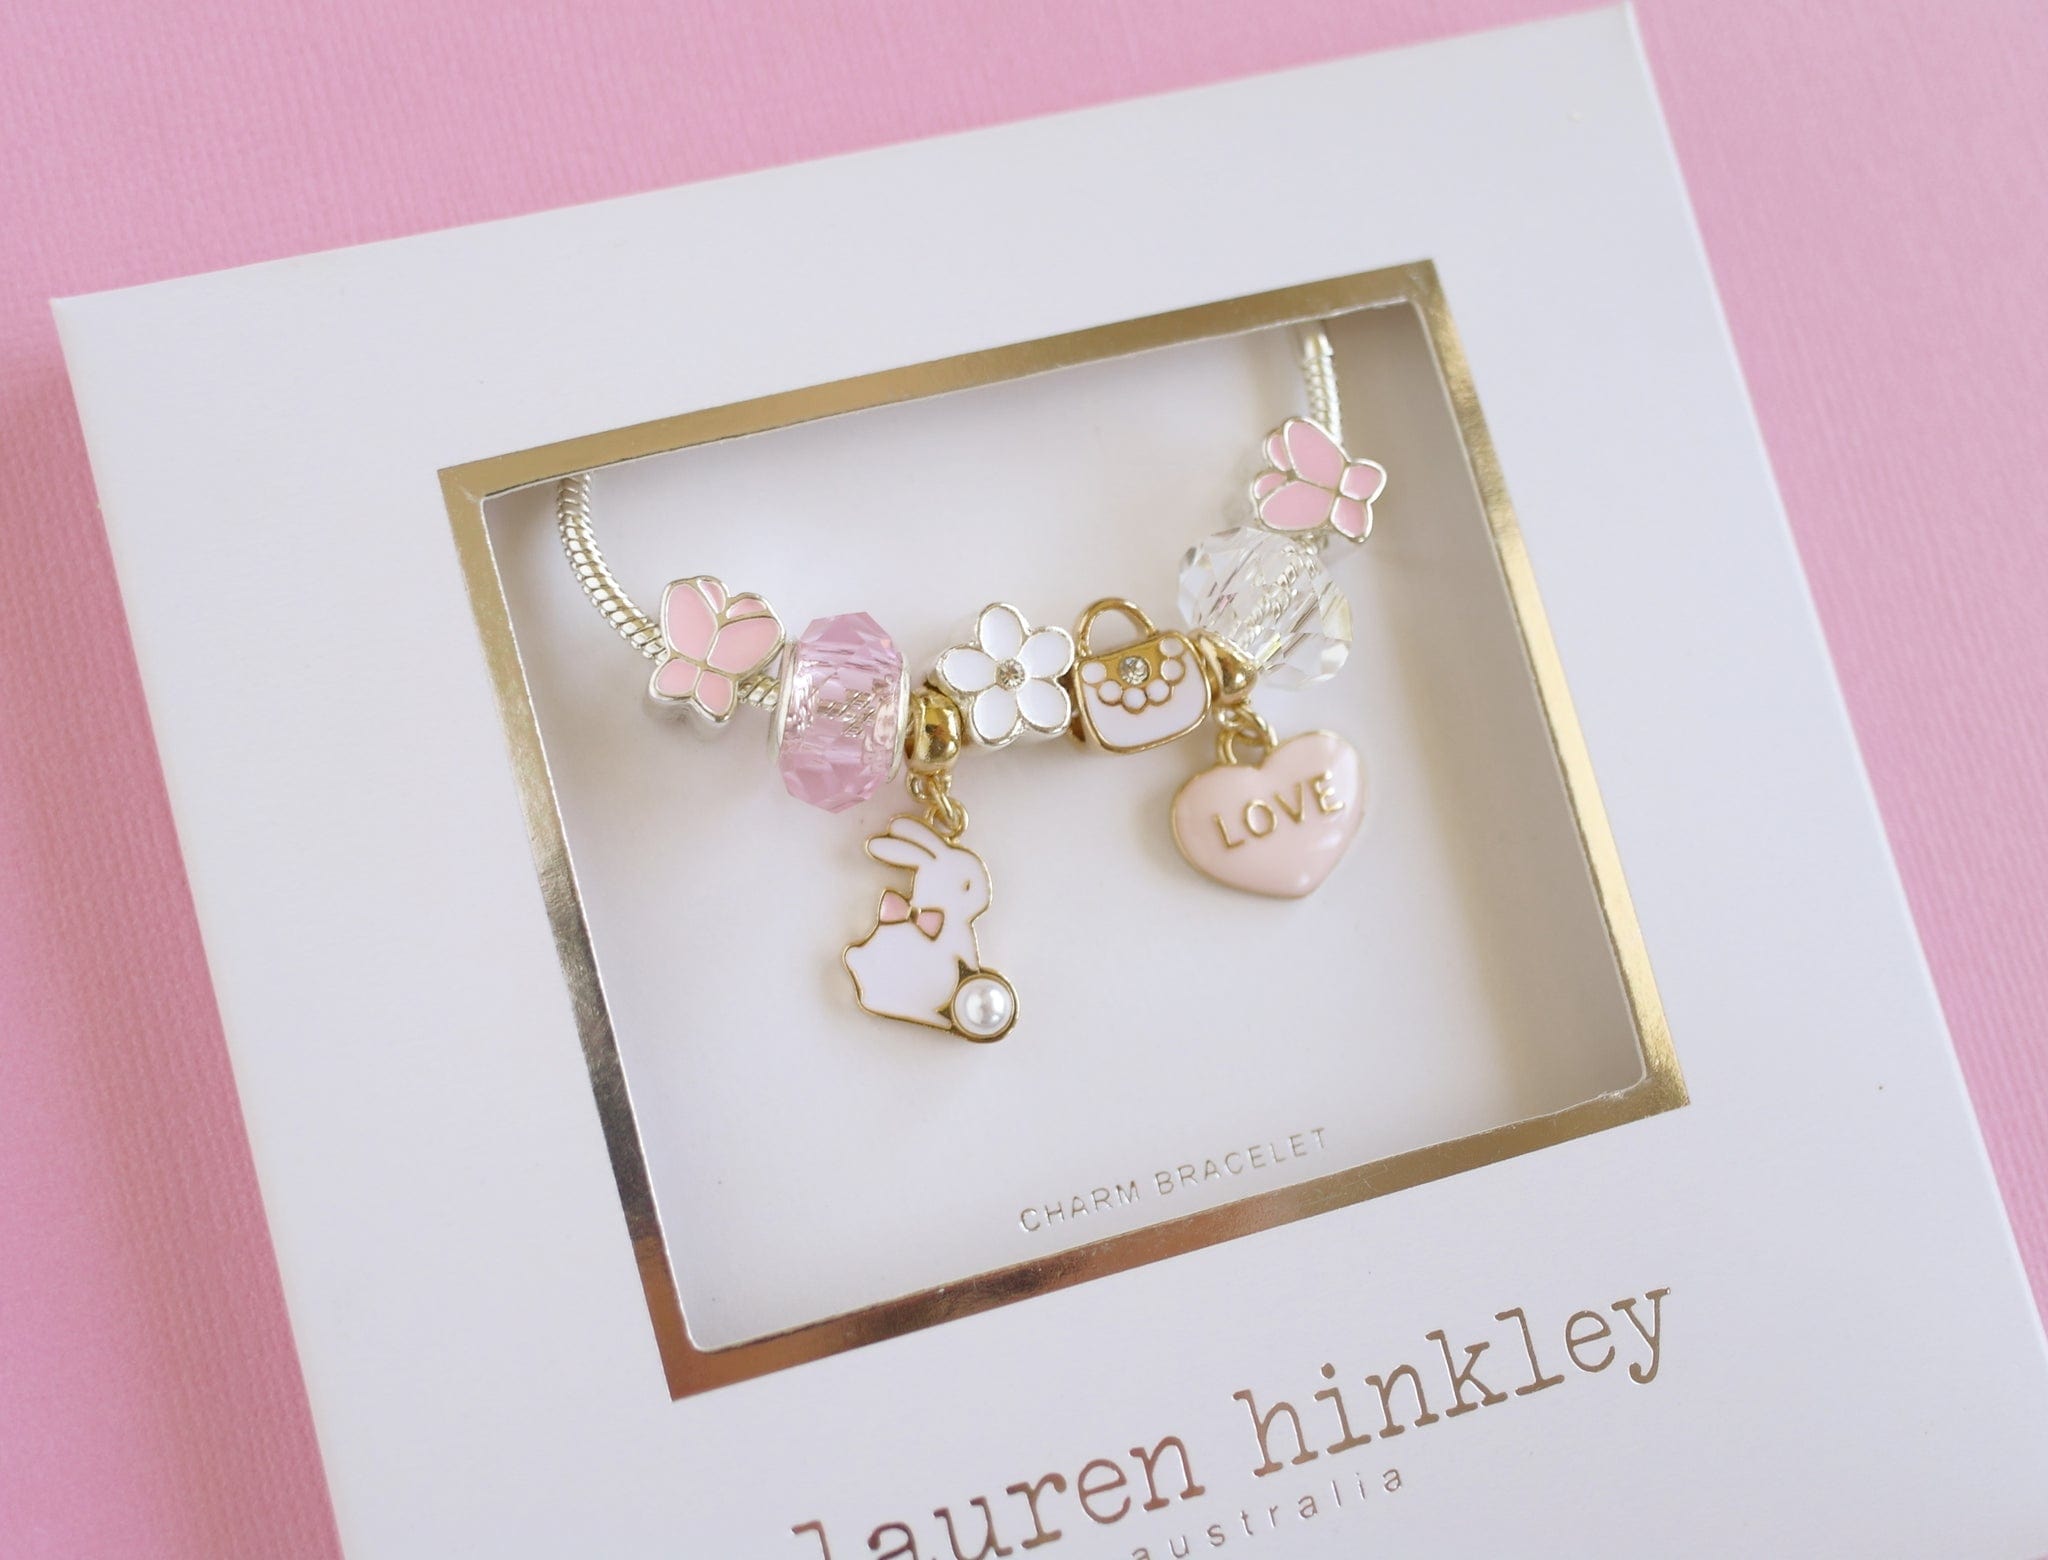 Lauren Hinkley Girls Accessory Bunny Charm Bracelet